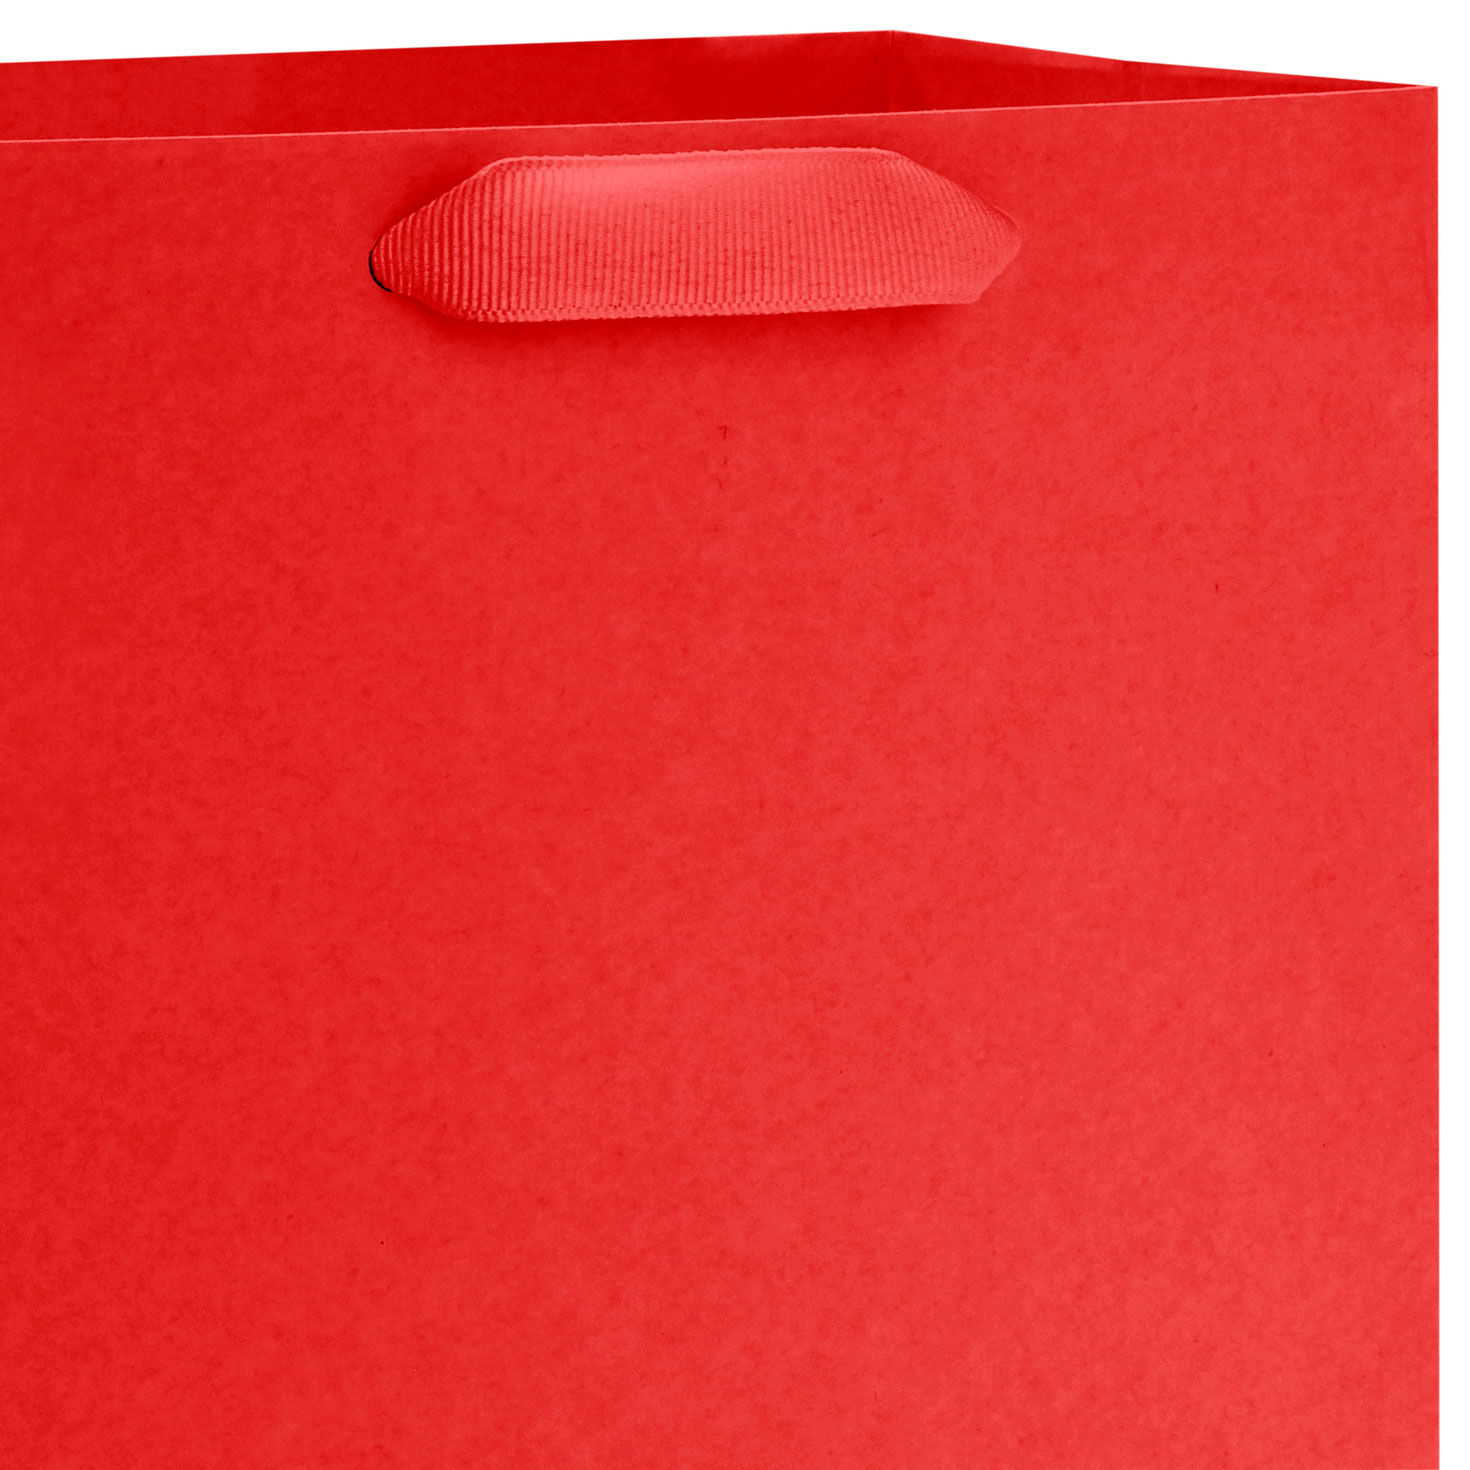 9.6" Red Medium Gift Bag for only USD 3.49 | Hallmark